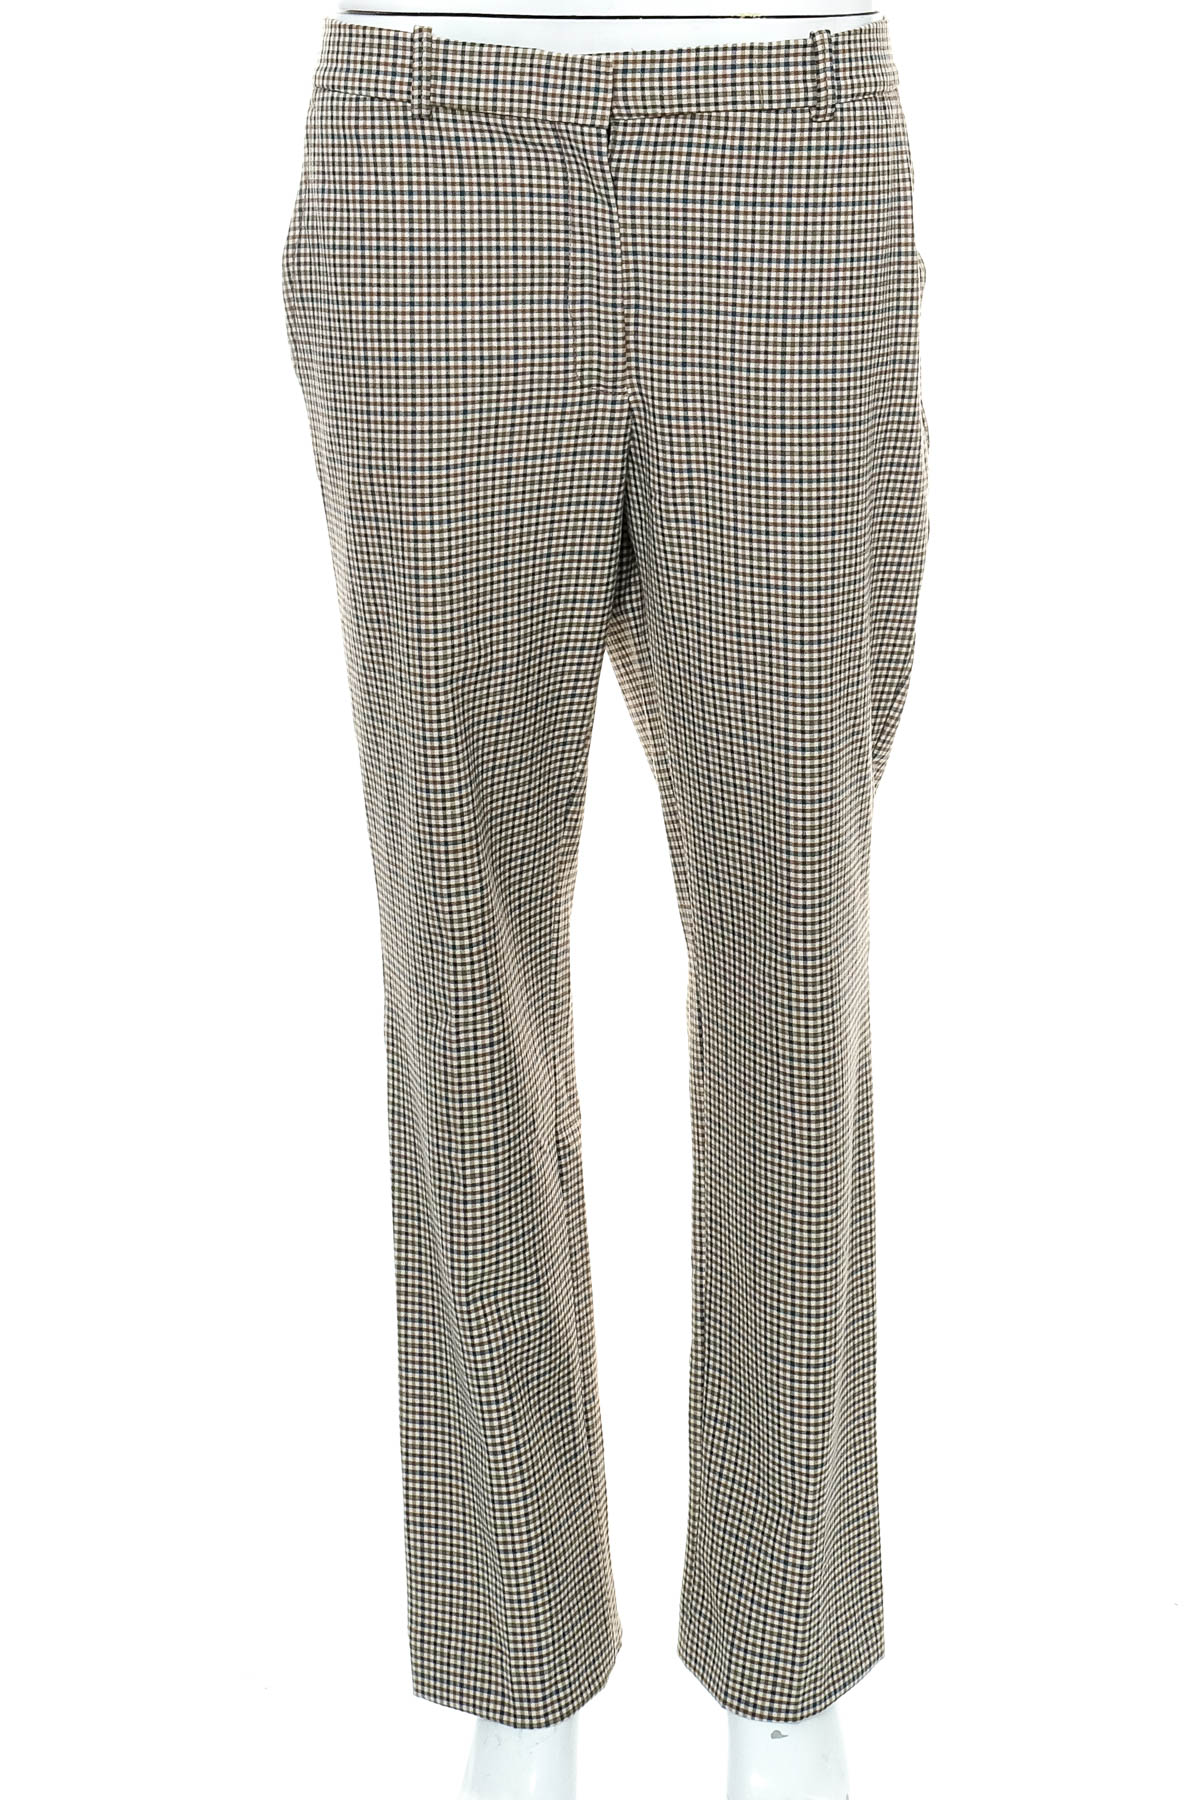 Women's trousers - MANGO SUIT - 0